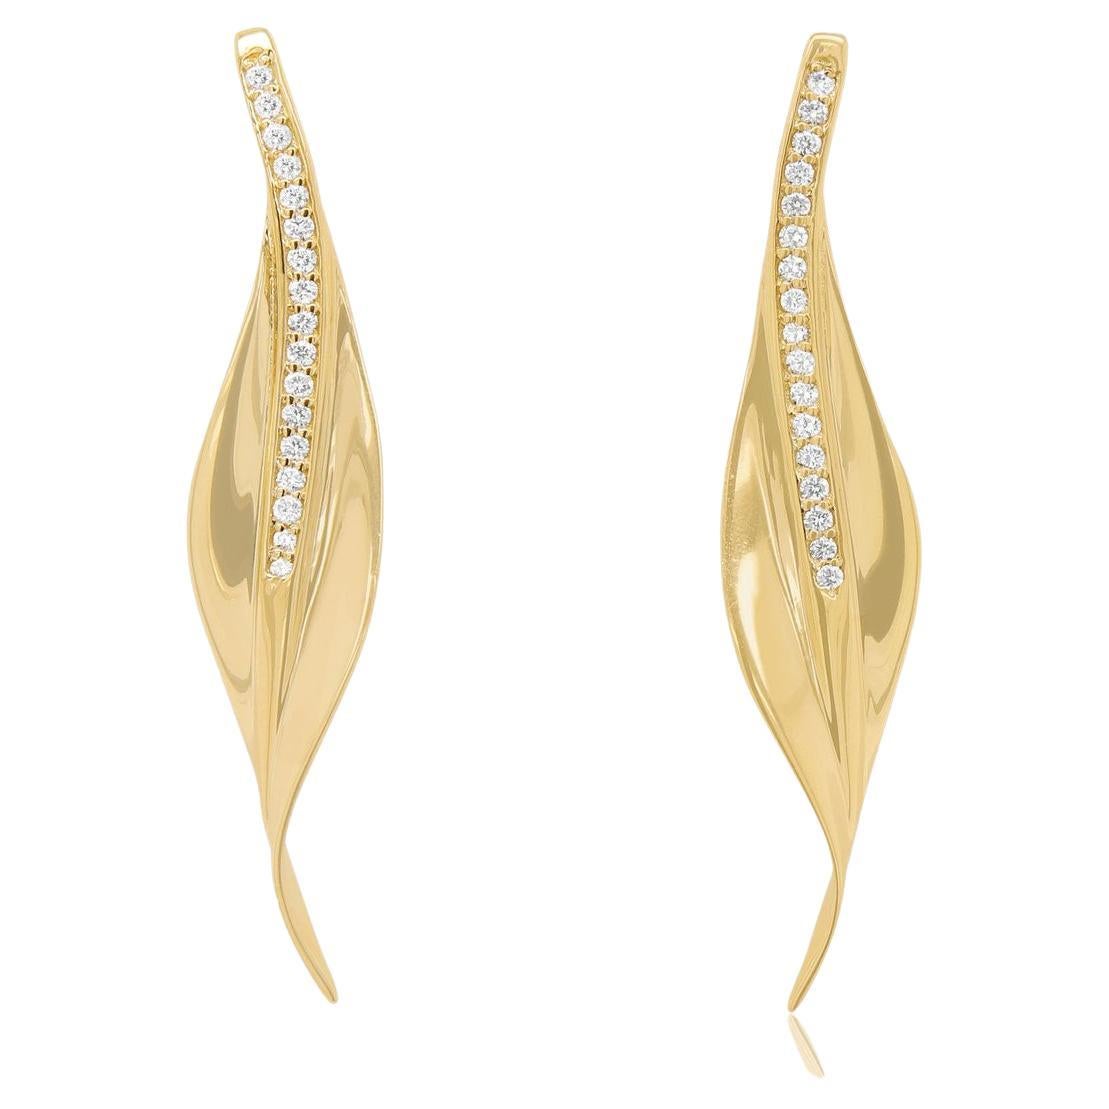 Modern White Diamond Leaf Drop Earrings 18K Yellow Gold Statement Long Large